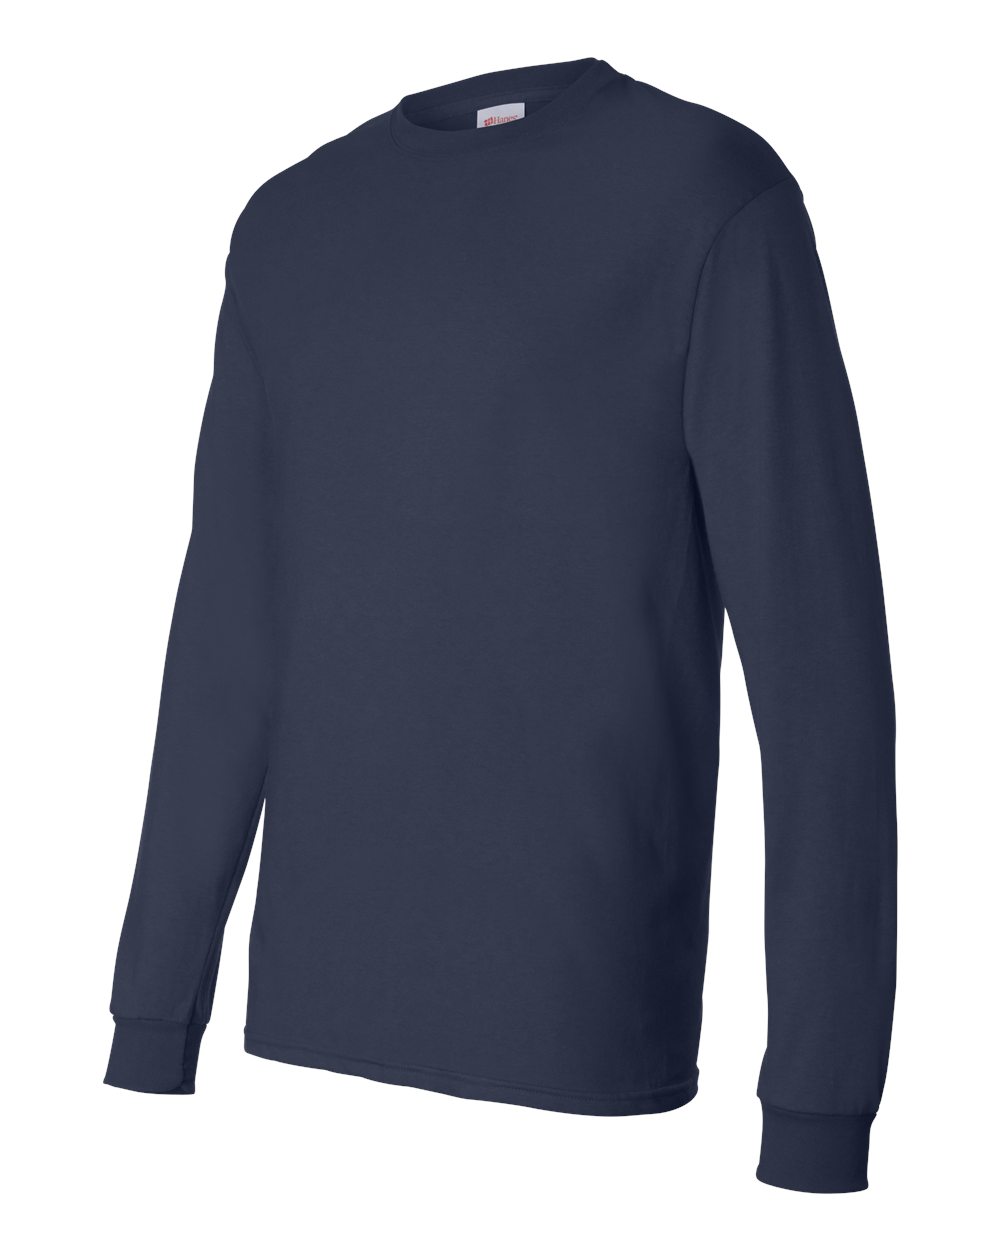 Hanes 5286 - ComfortSoft Heavyweight Long Sleeve T-Shirt